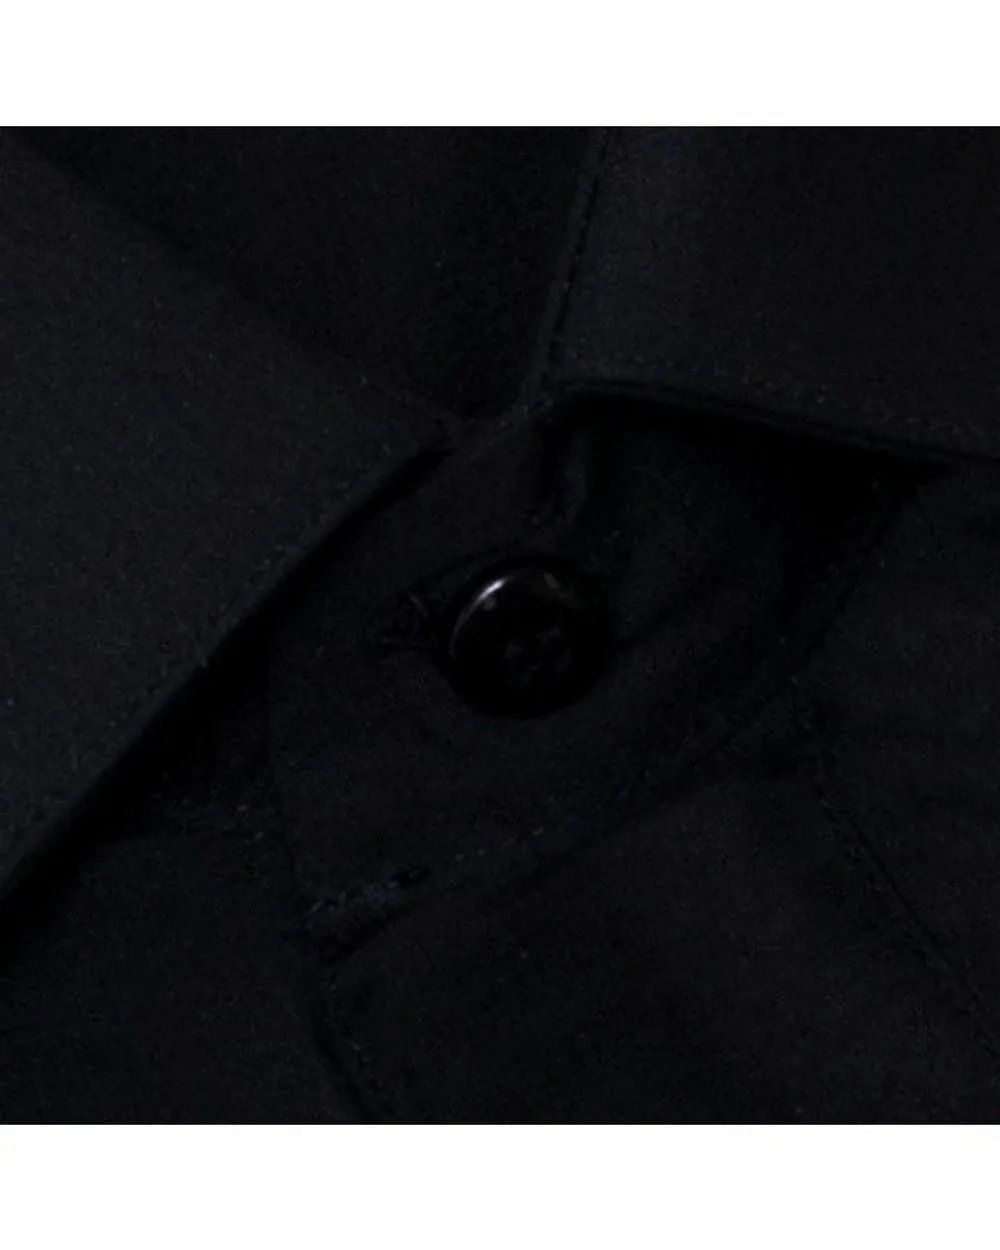 Camisa de vestir clásica manga larga negra slim fit